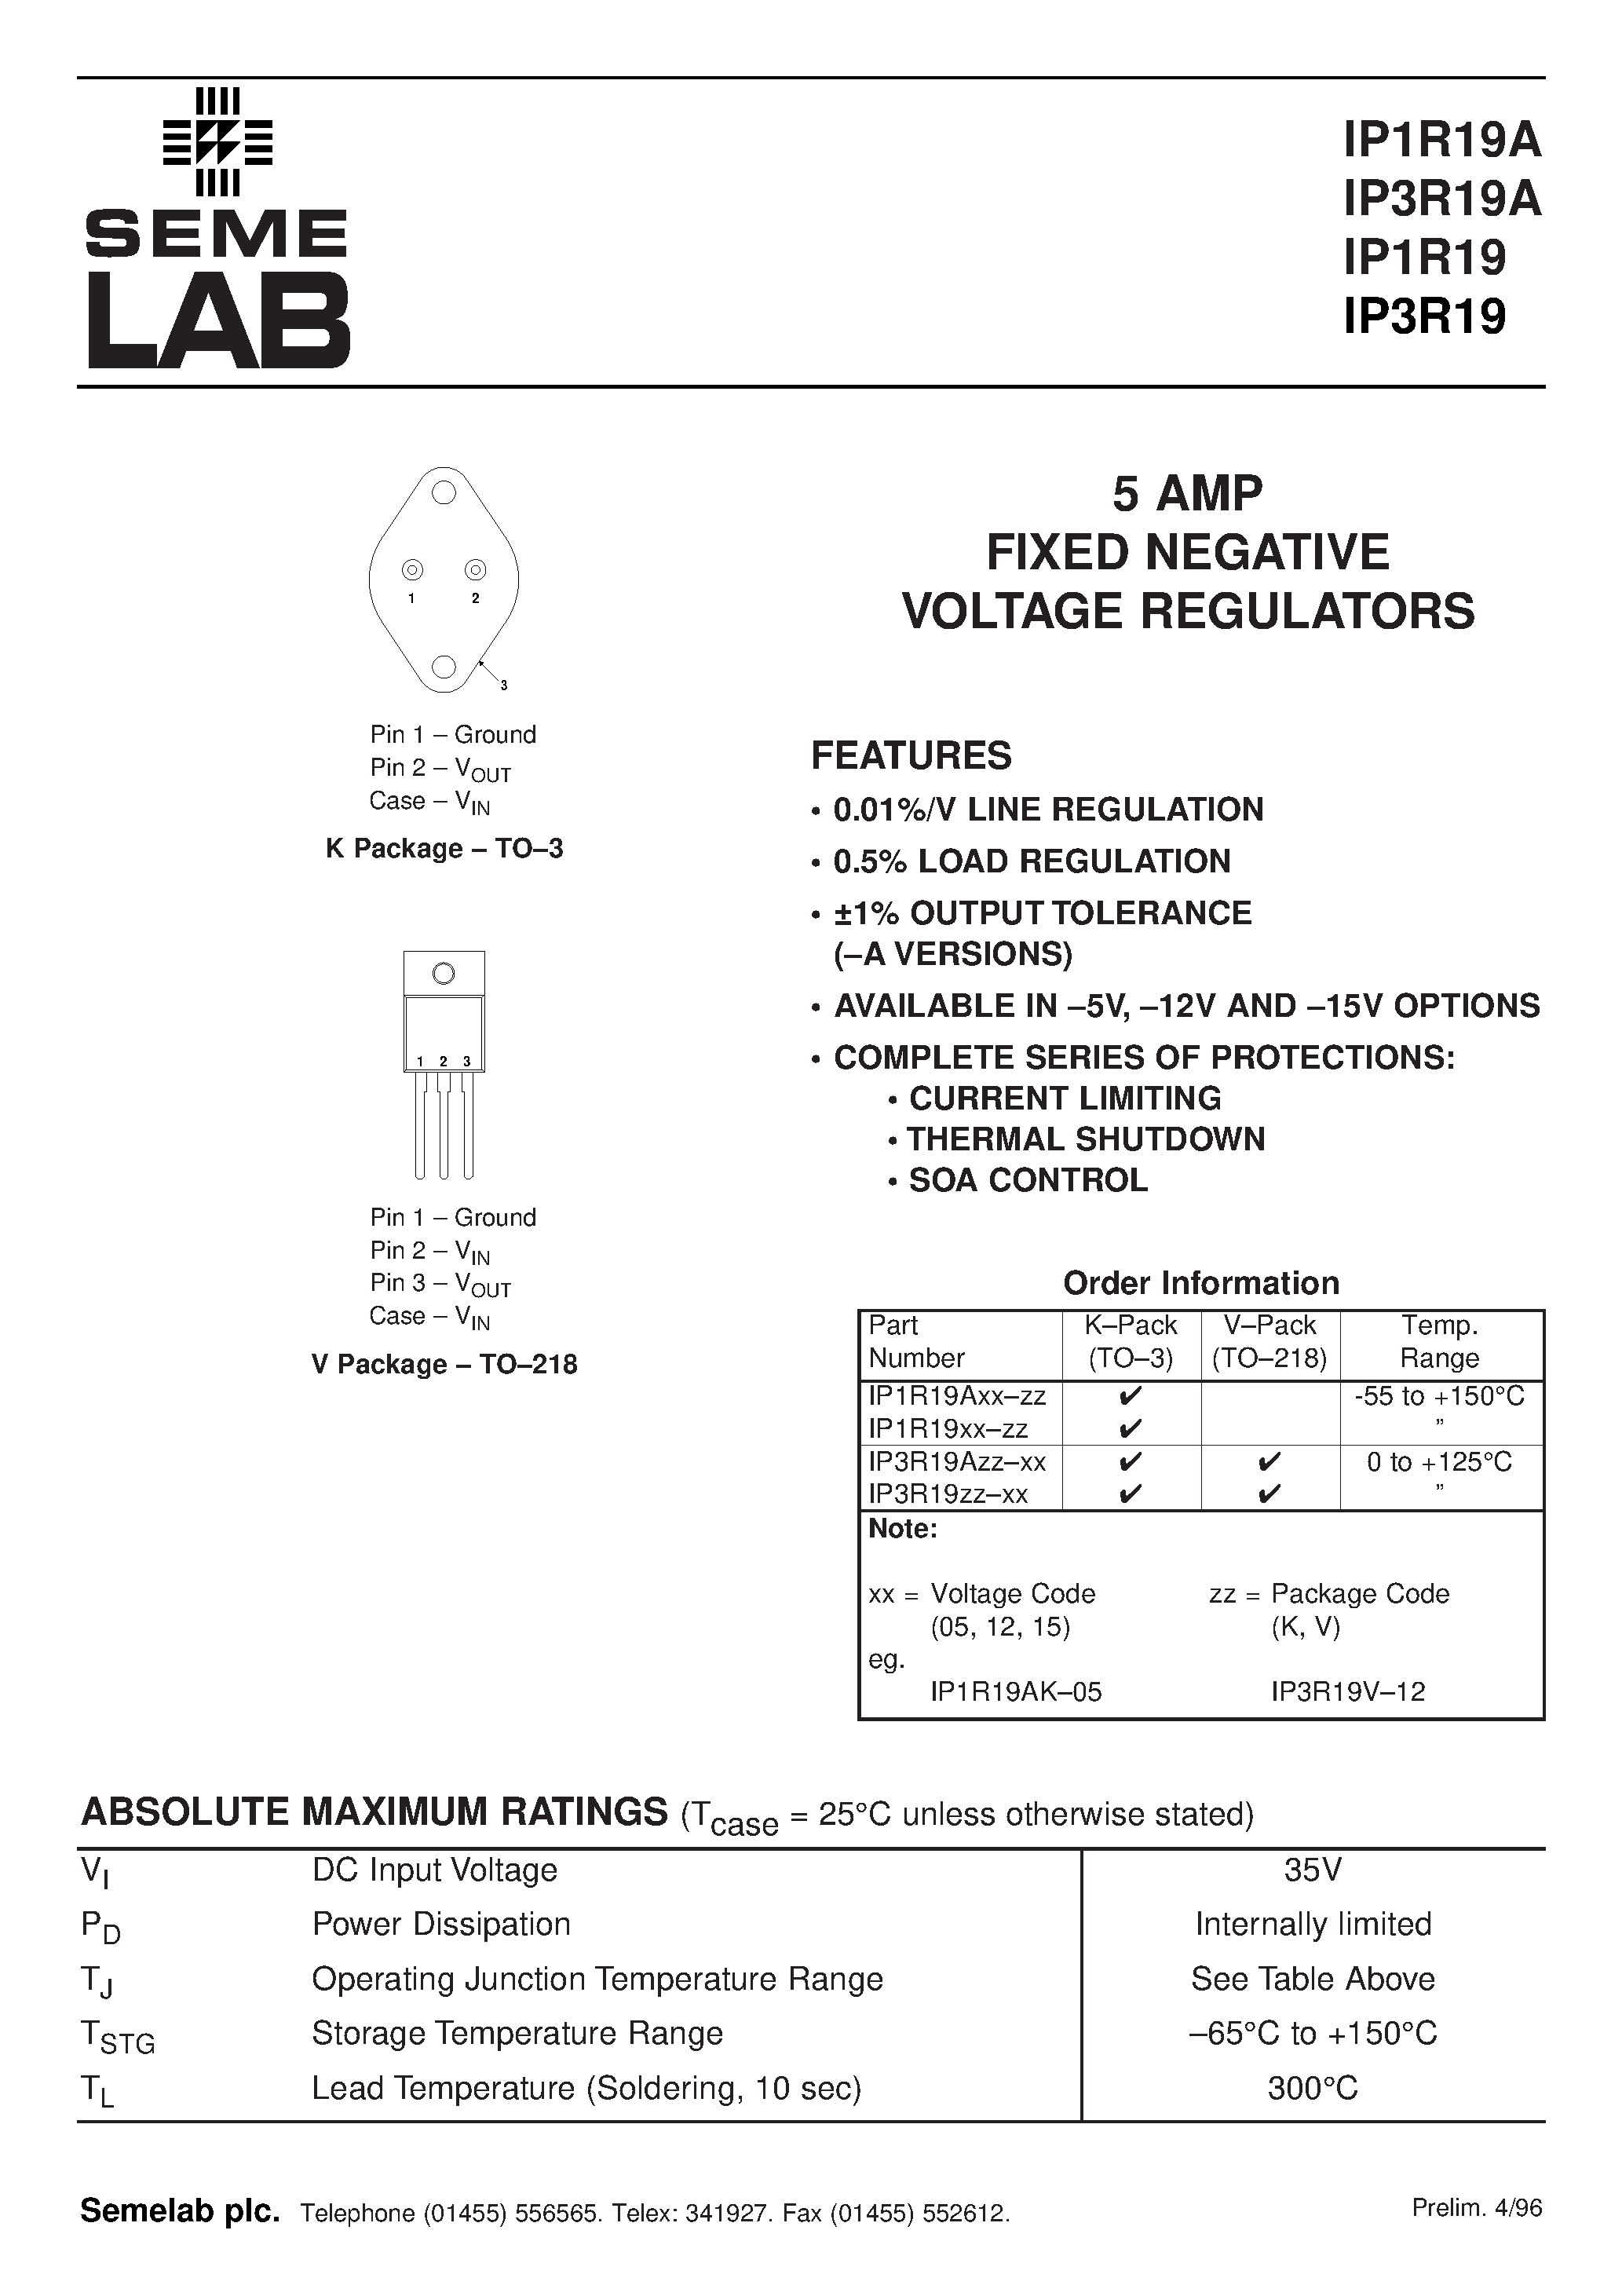 Datasheet IP1R1912-V - 5 AMP FIXED NEGATIVE VOLTAGE REGULATORS page 1